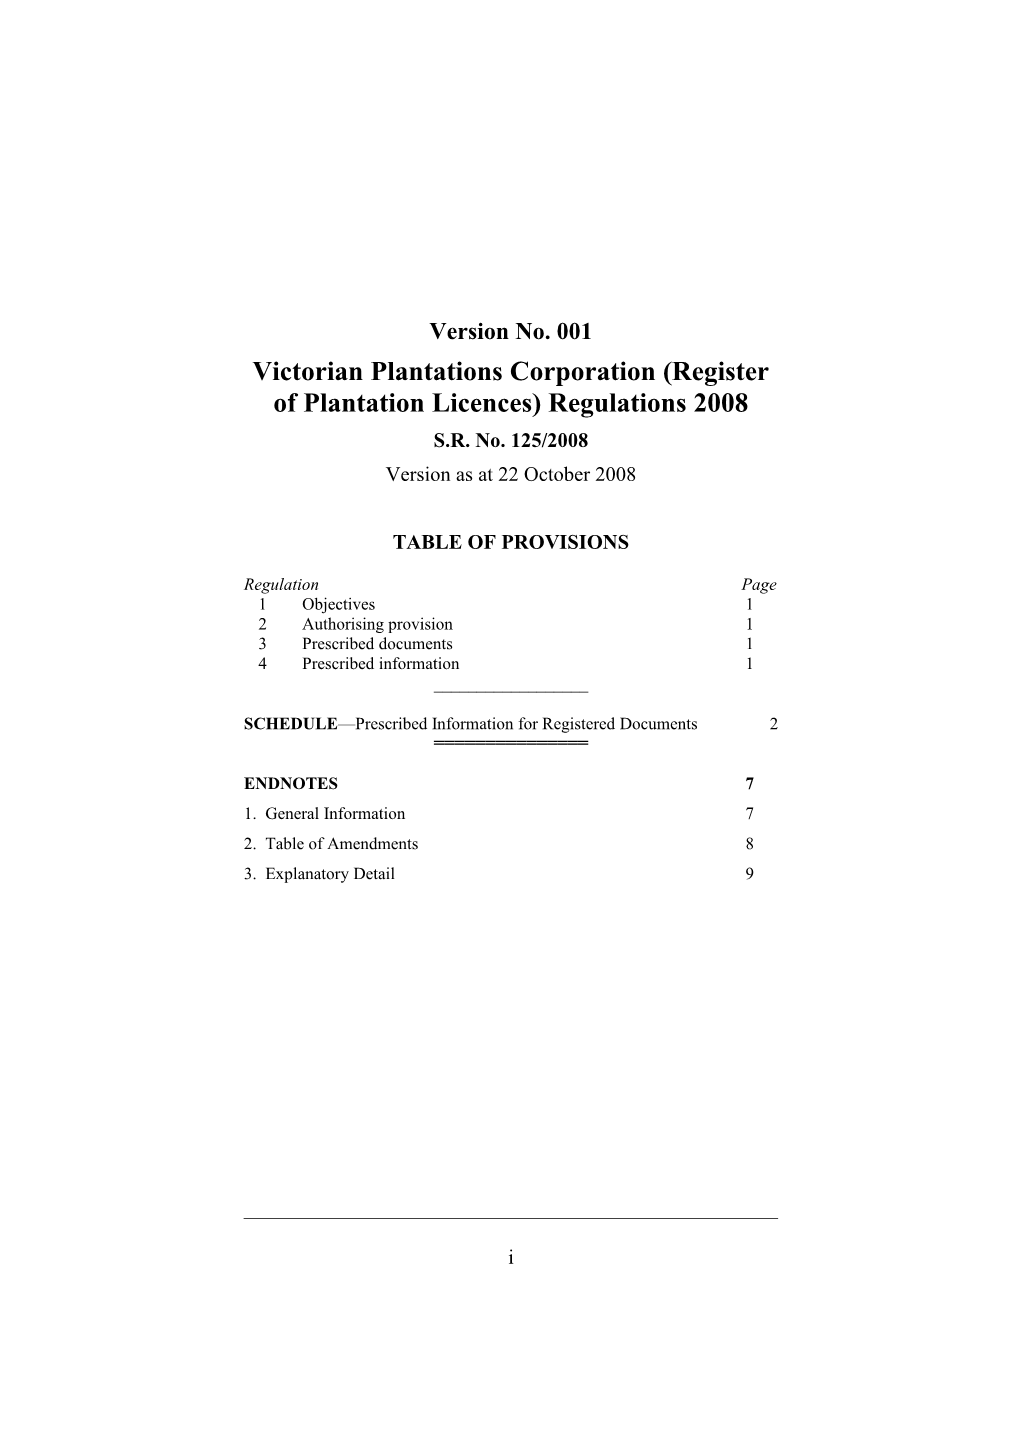 Victorian Plantations Corporation (Register of Plantation Licences) Regulations 2008